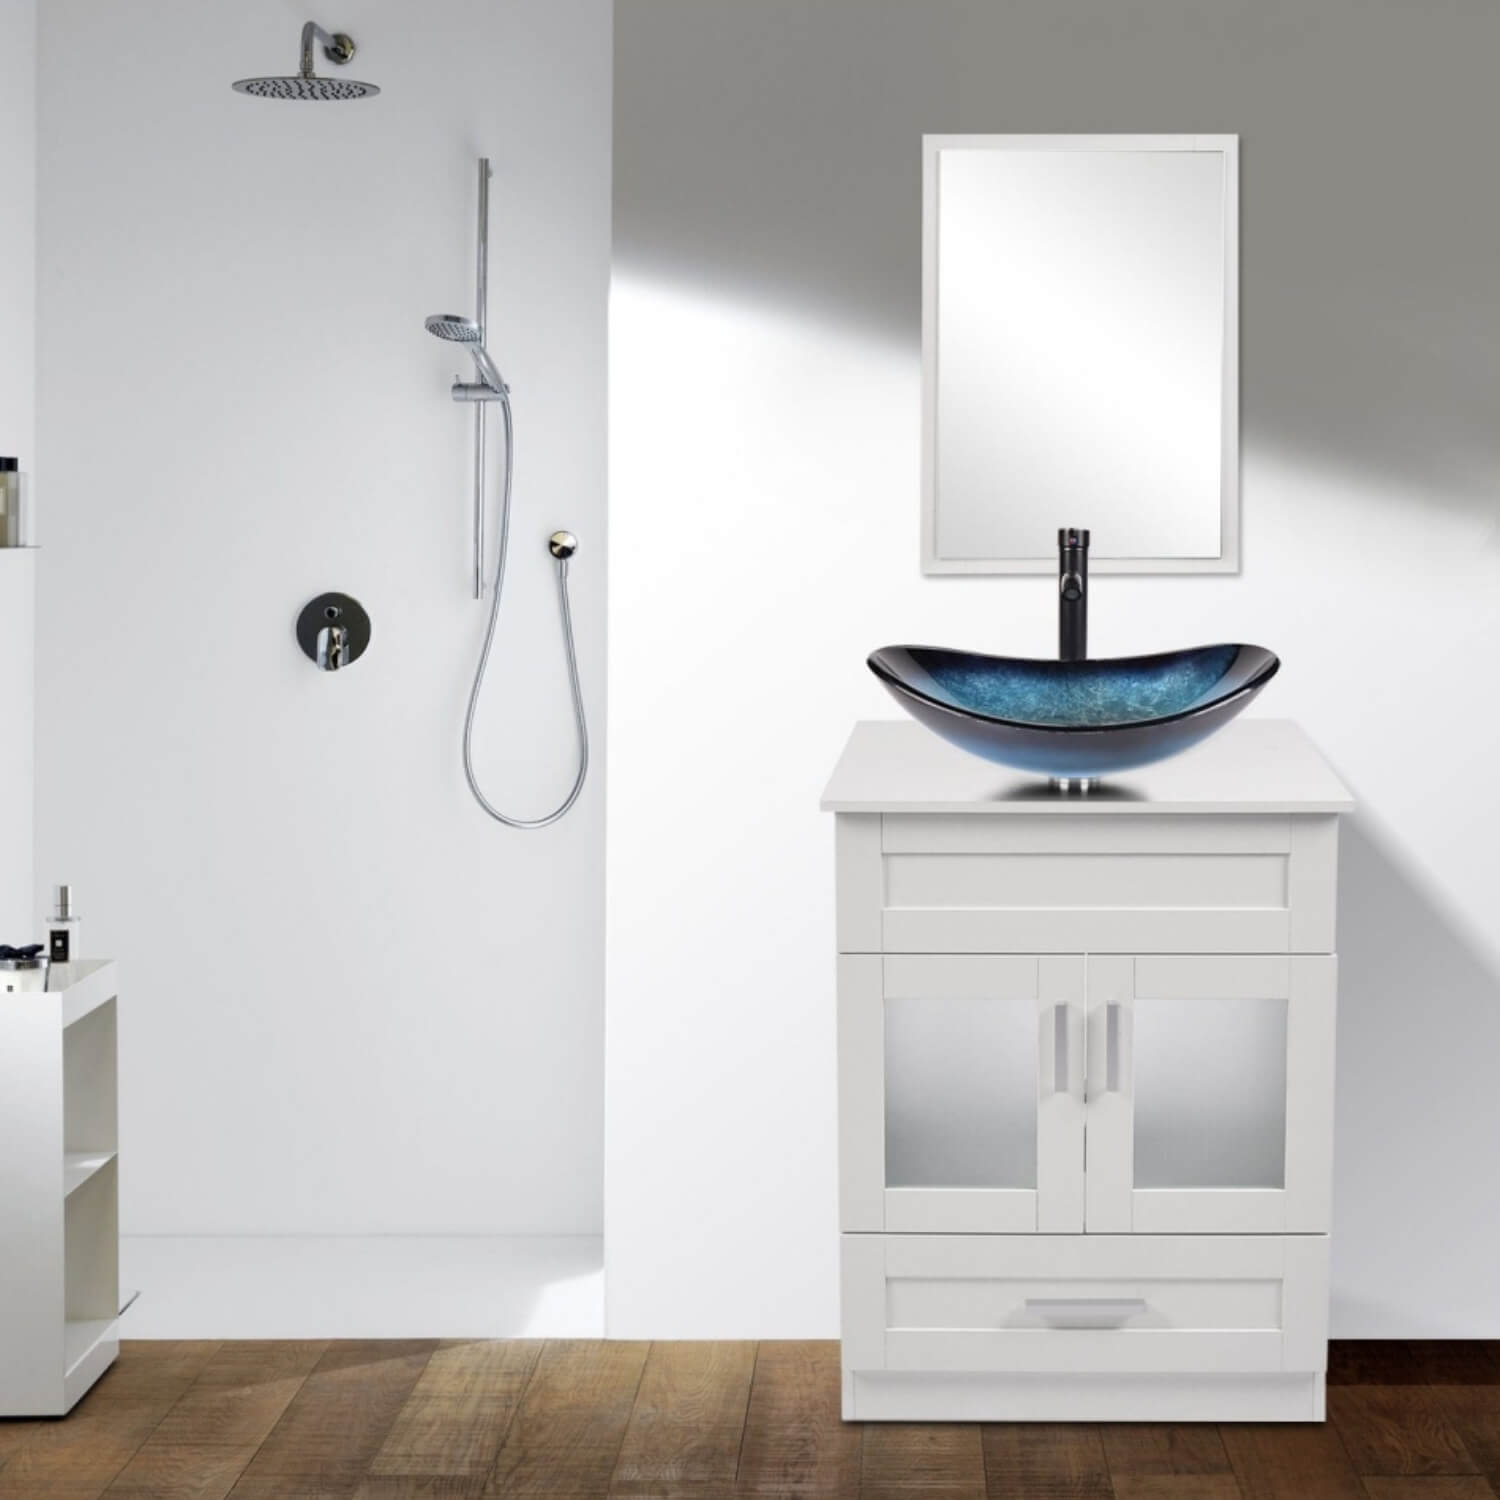 Elecwish White Bathroom Vanity with Blue Boat Sink Set BA1001-WH display scene